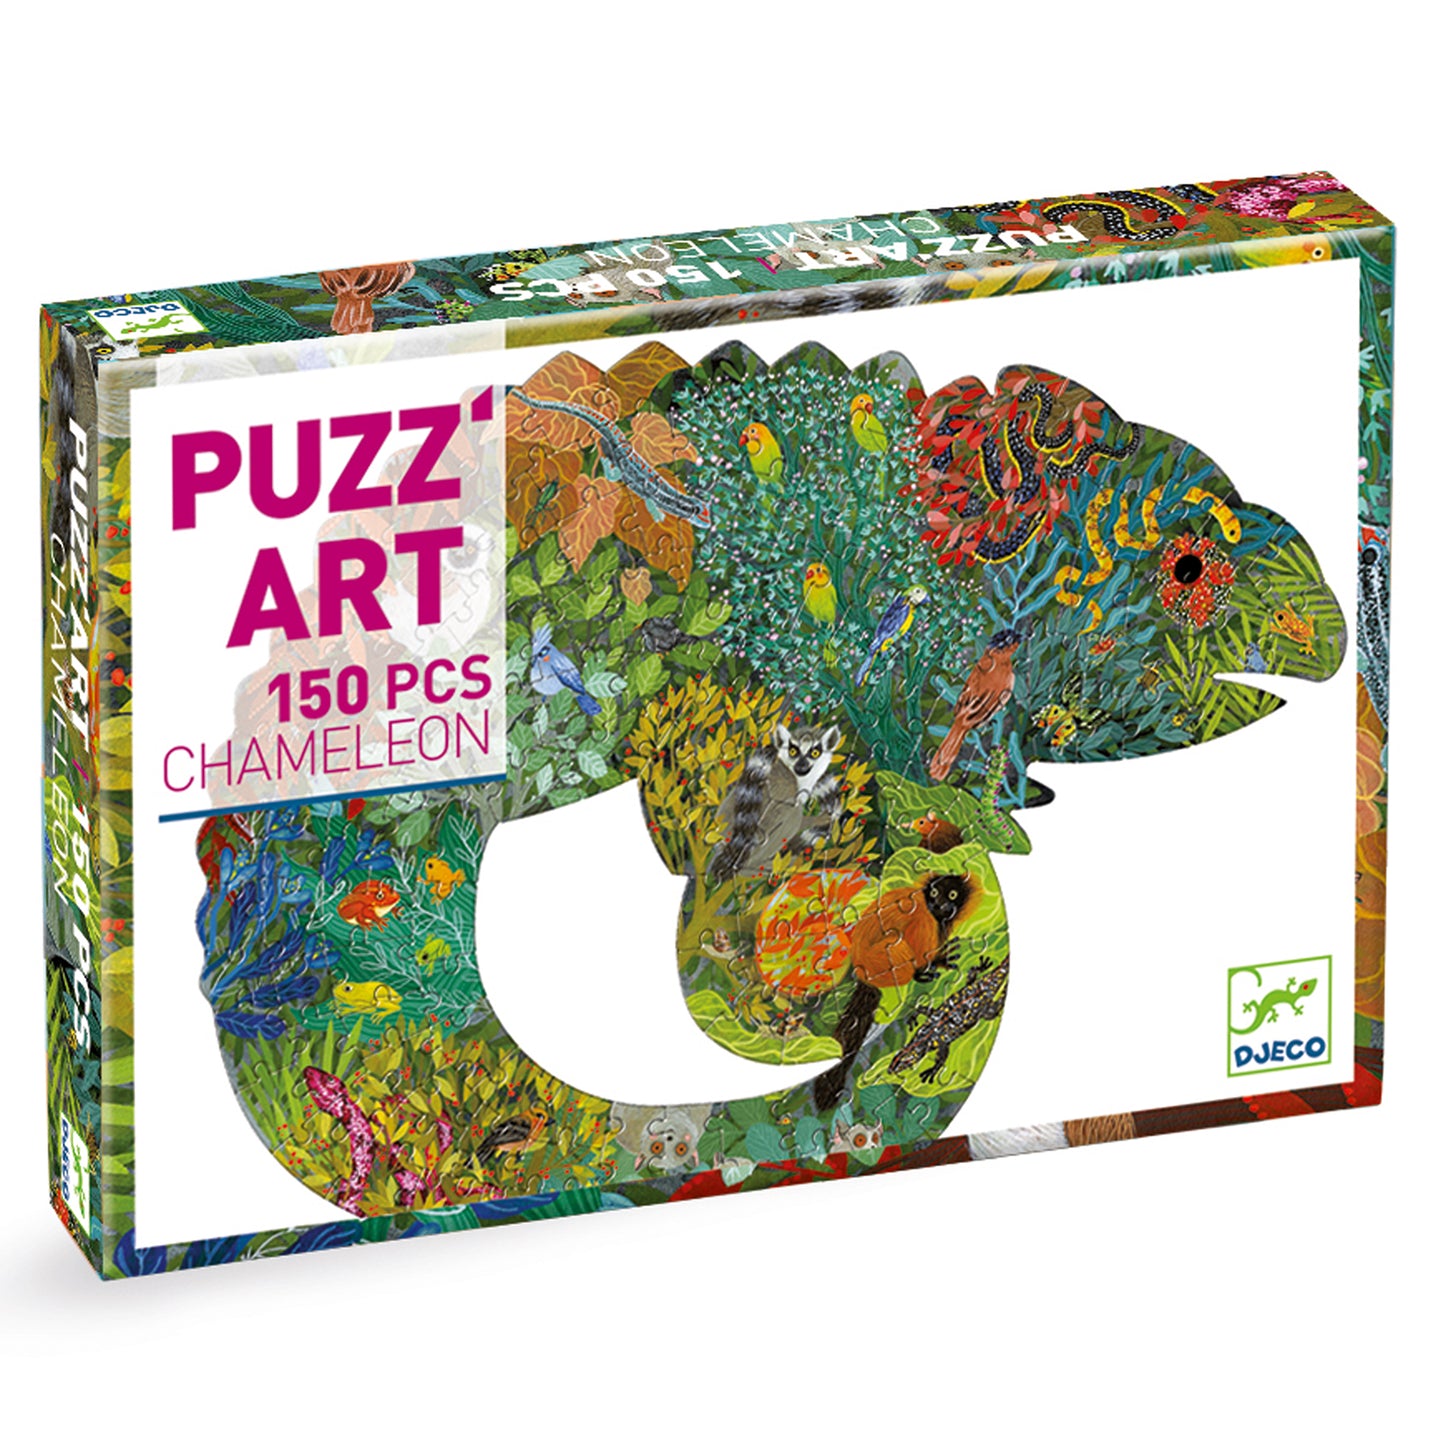 Puzz’Art - Chamelon 150 pezzi